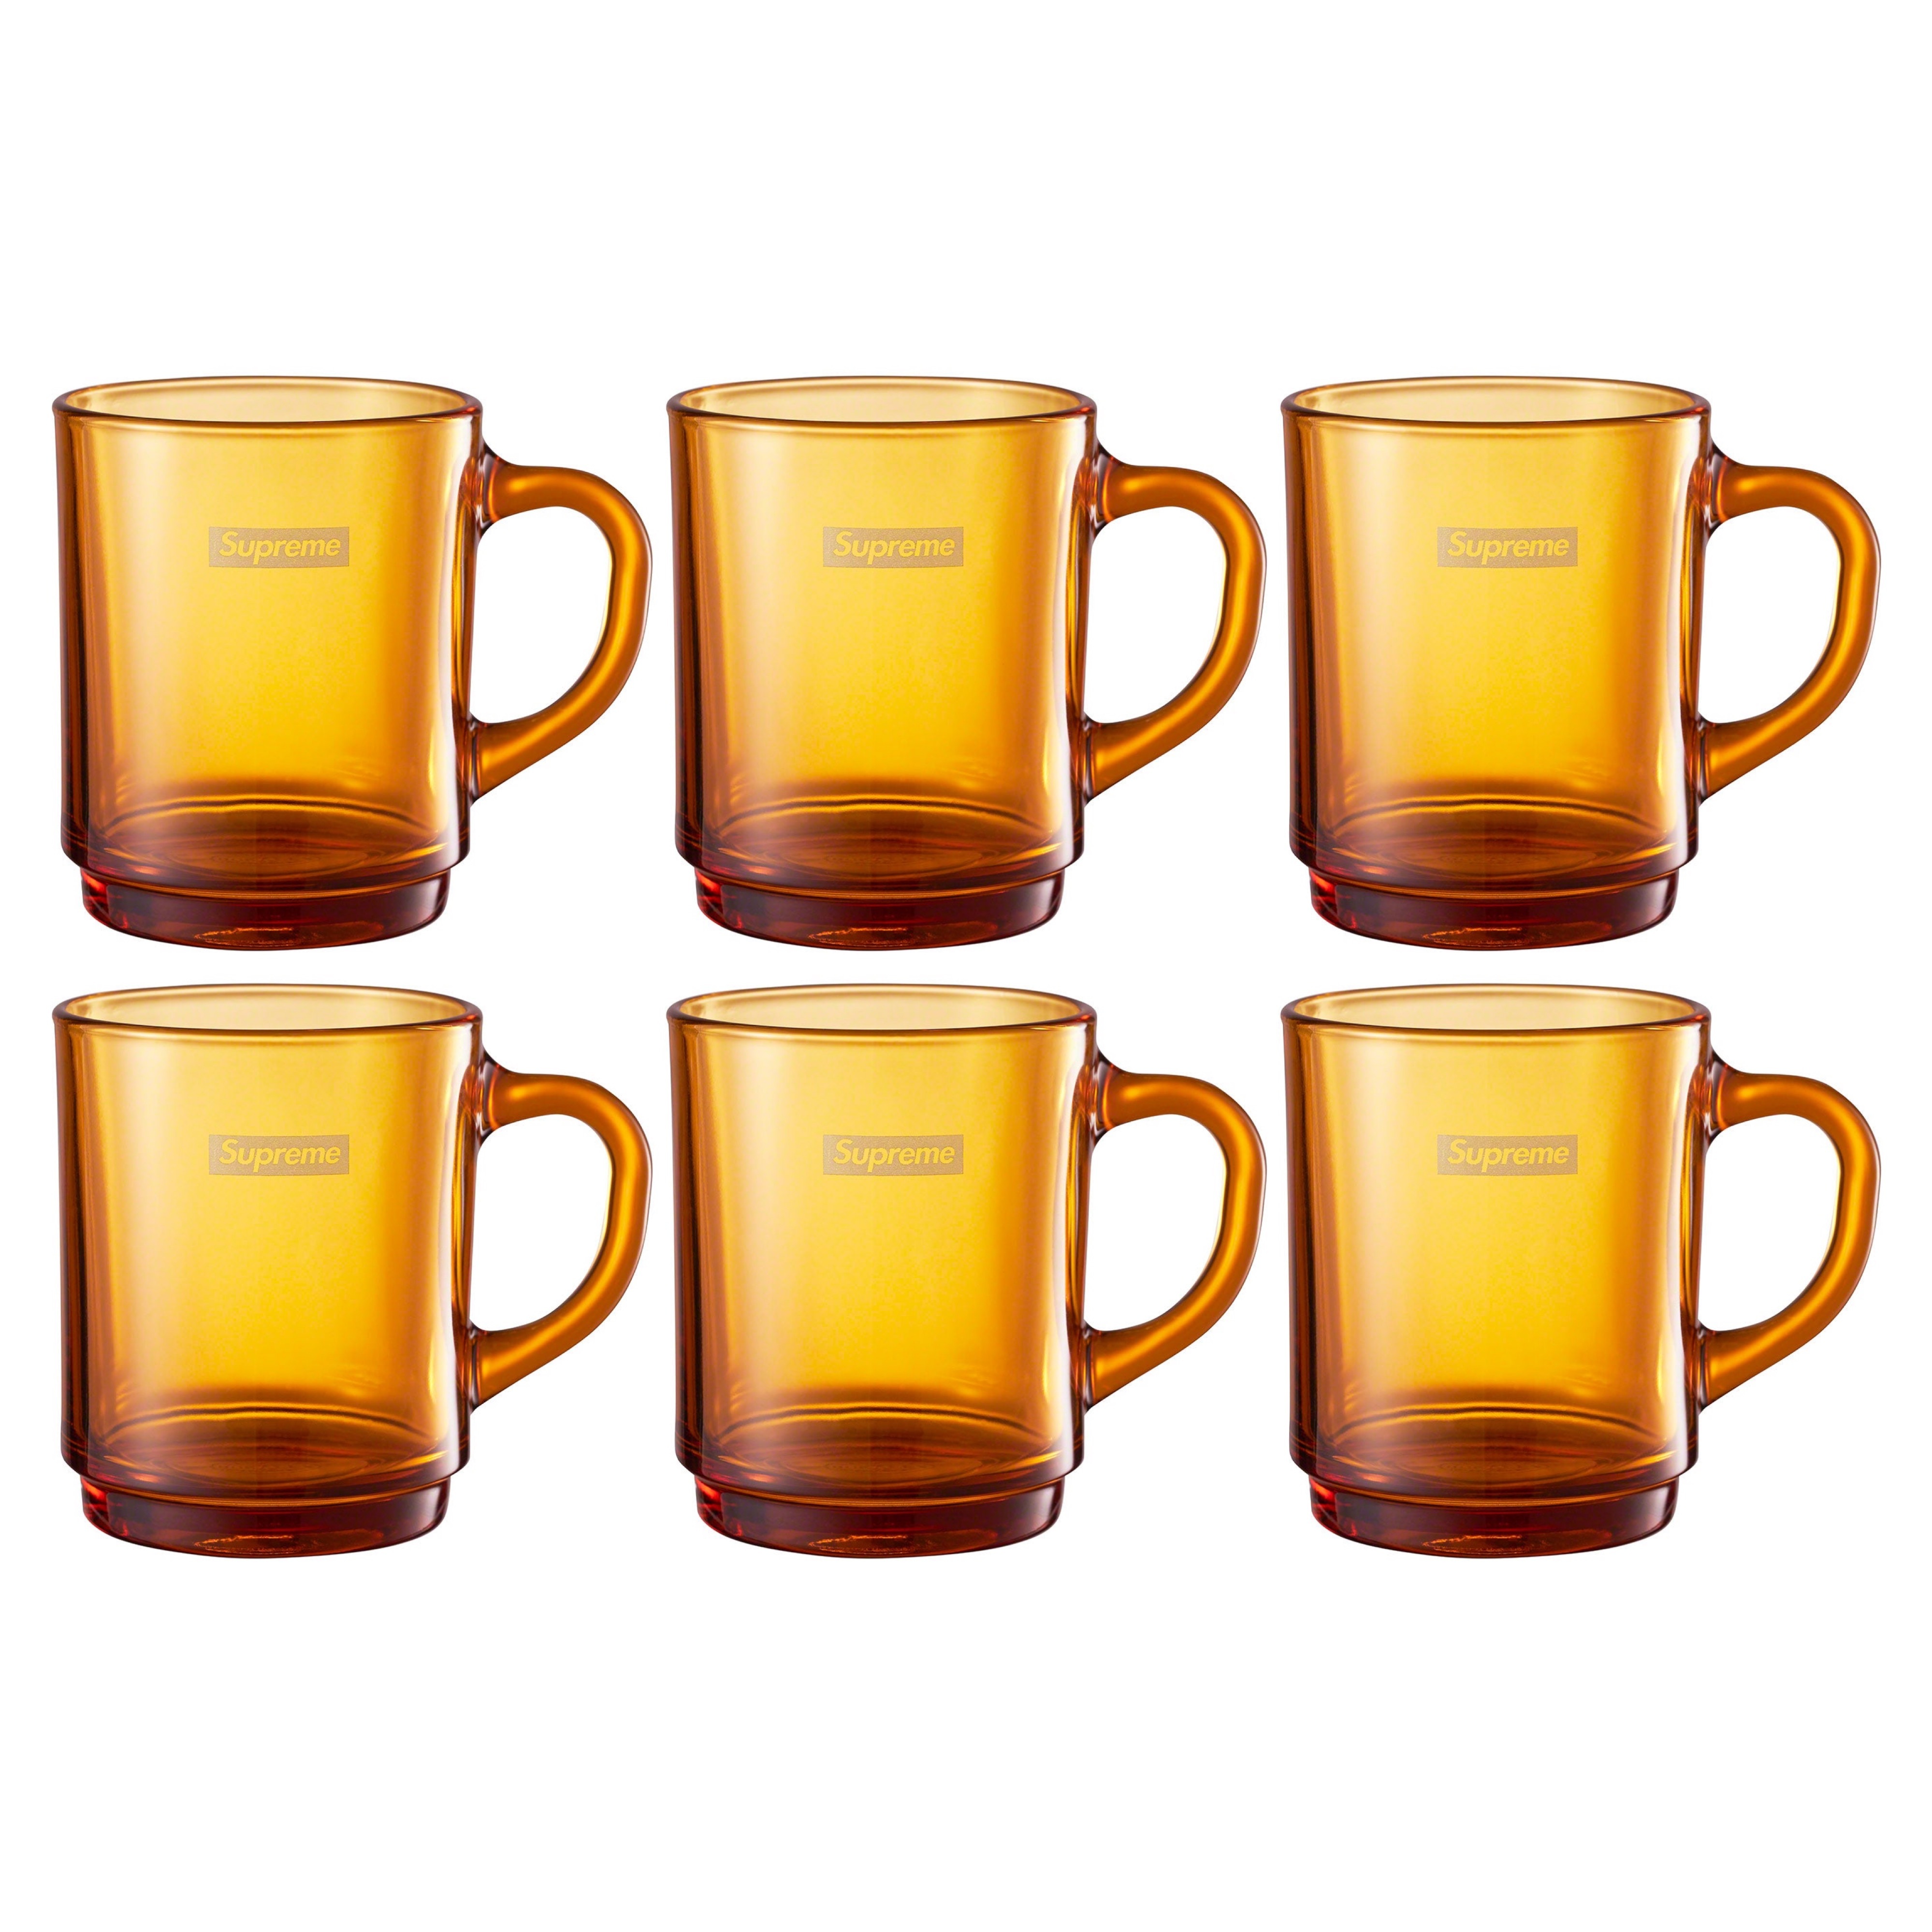 Supreme Duralex Glass Mugs Cup (Set of 6)